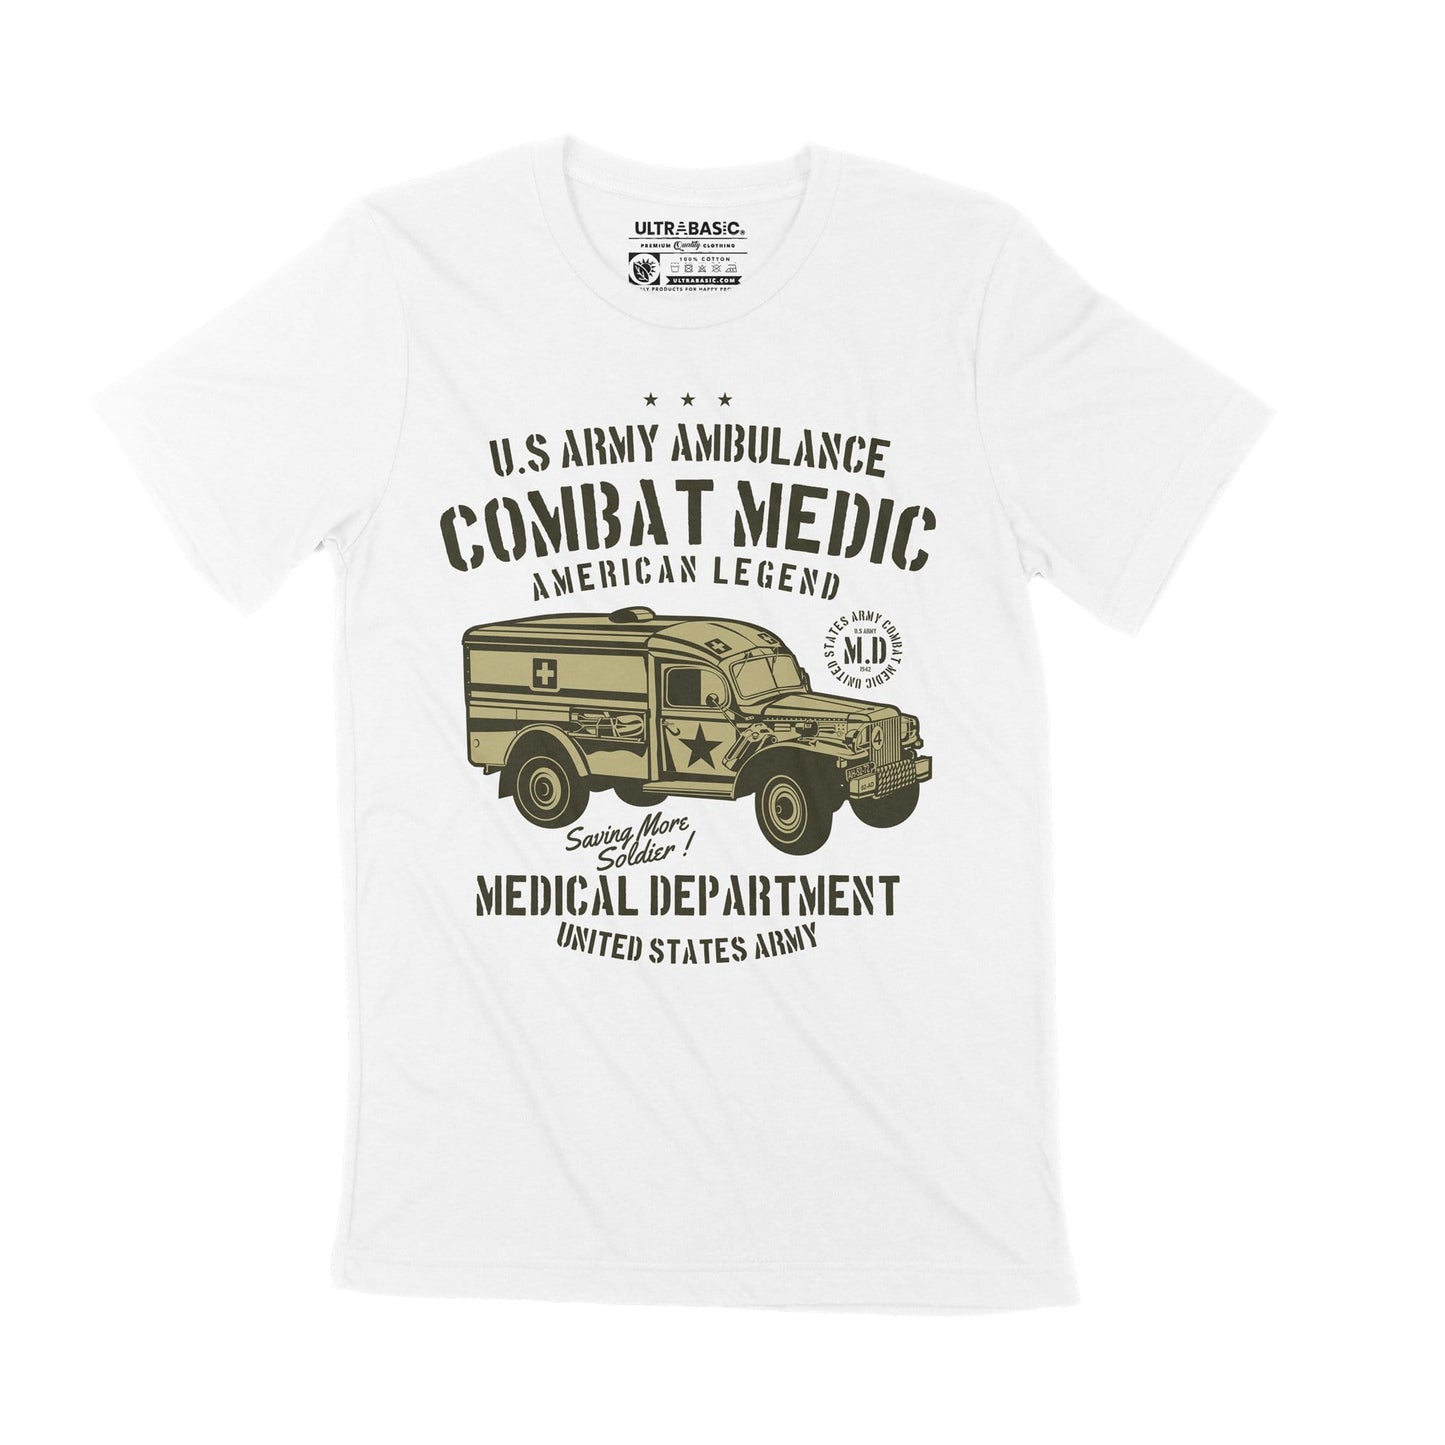 ULTRABASIC Men's Graphic T-Shirt Combat Medic - US Army Ambulance - Vintage Shirt